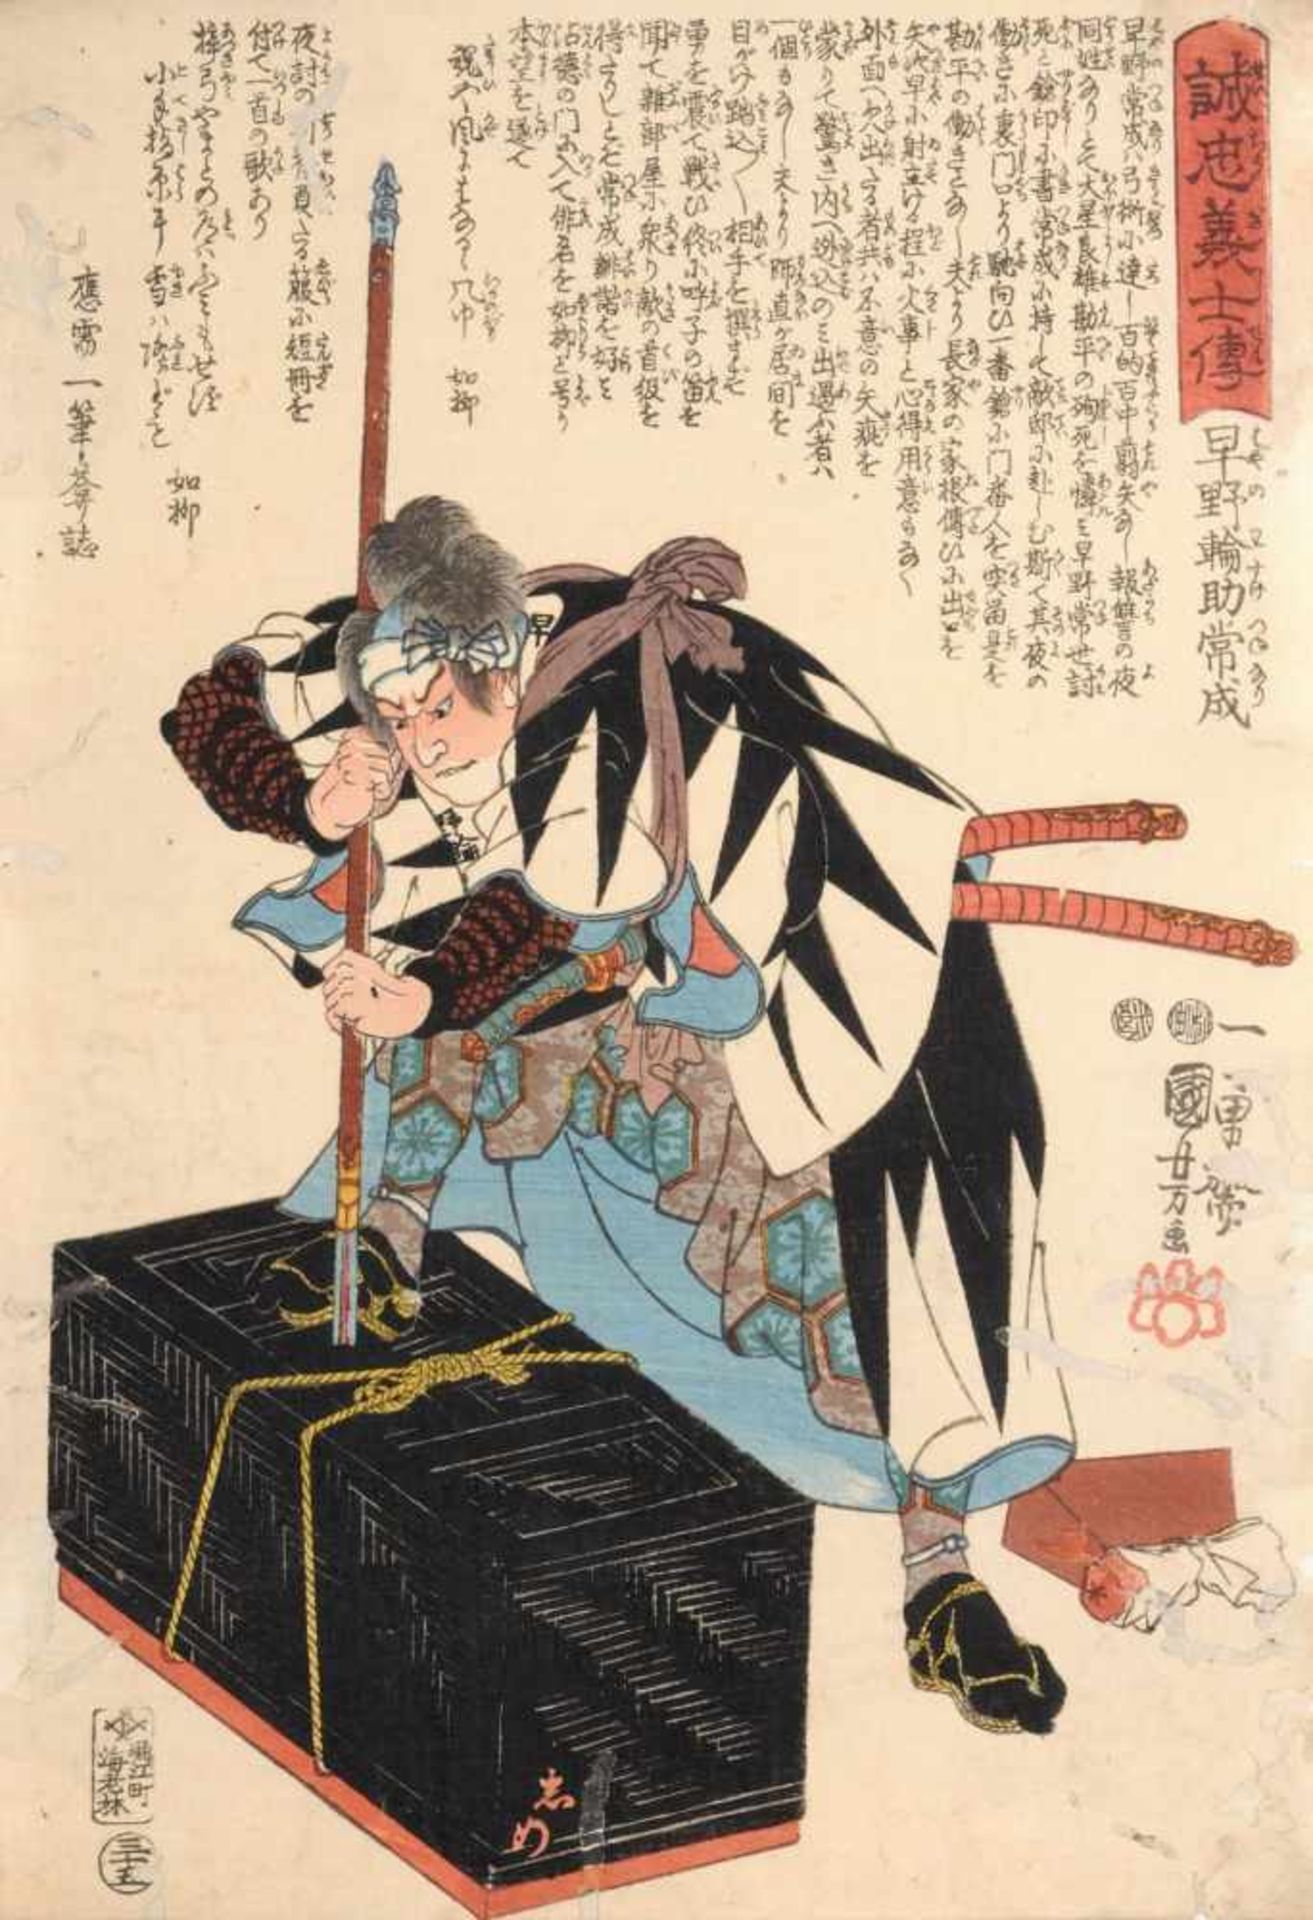 Utagawa Kuniyoshi "Hayano Wasuke Tsunenari" (Samurai, einen verschnürten Kasten durchbohrend).